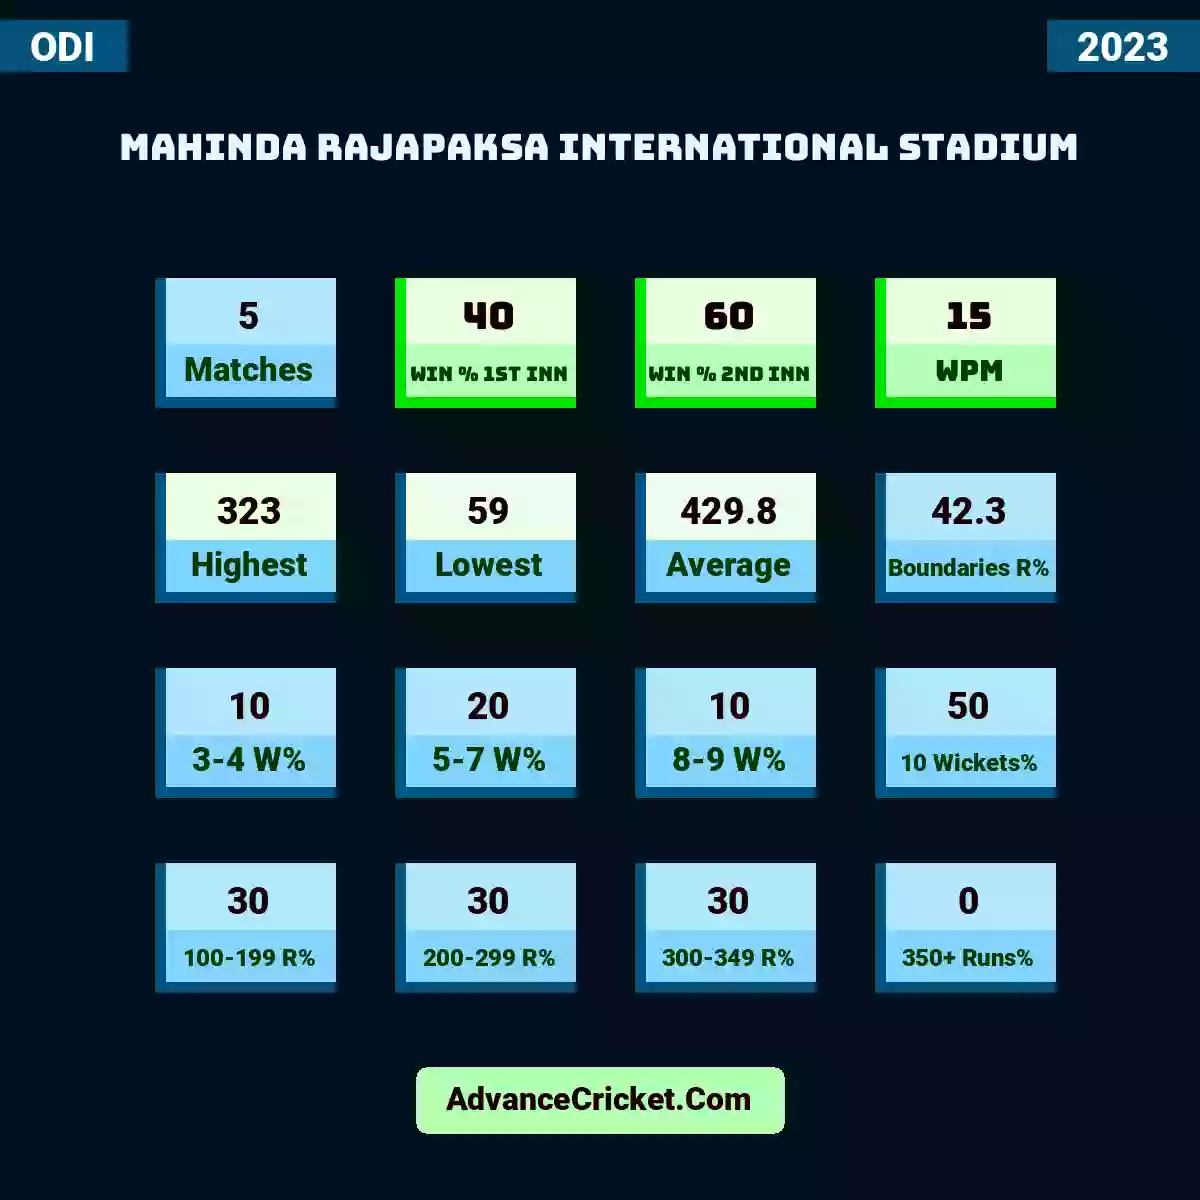 Image showing Mahinda Rajapaksa International Stadium with Matches: 5, Win % 1st Inn: 40, Win % 2nd Inn: 60, WPM: 15, Highest: 323, Lowest: 59, Average: 429.8, Boundaries R%: 42.3, 3-4 W%: 10, 5-7 W%: 20, 8-9 W%: 10, 10 Wickets%: 50, 100-199 R%: 30, 200-299 R%: 30, 300-349 R%: 30, 350+ Runs%: 0.